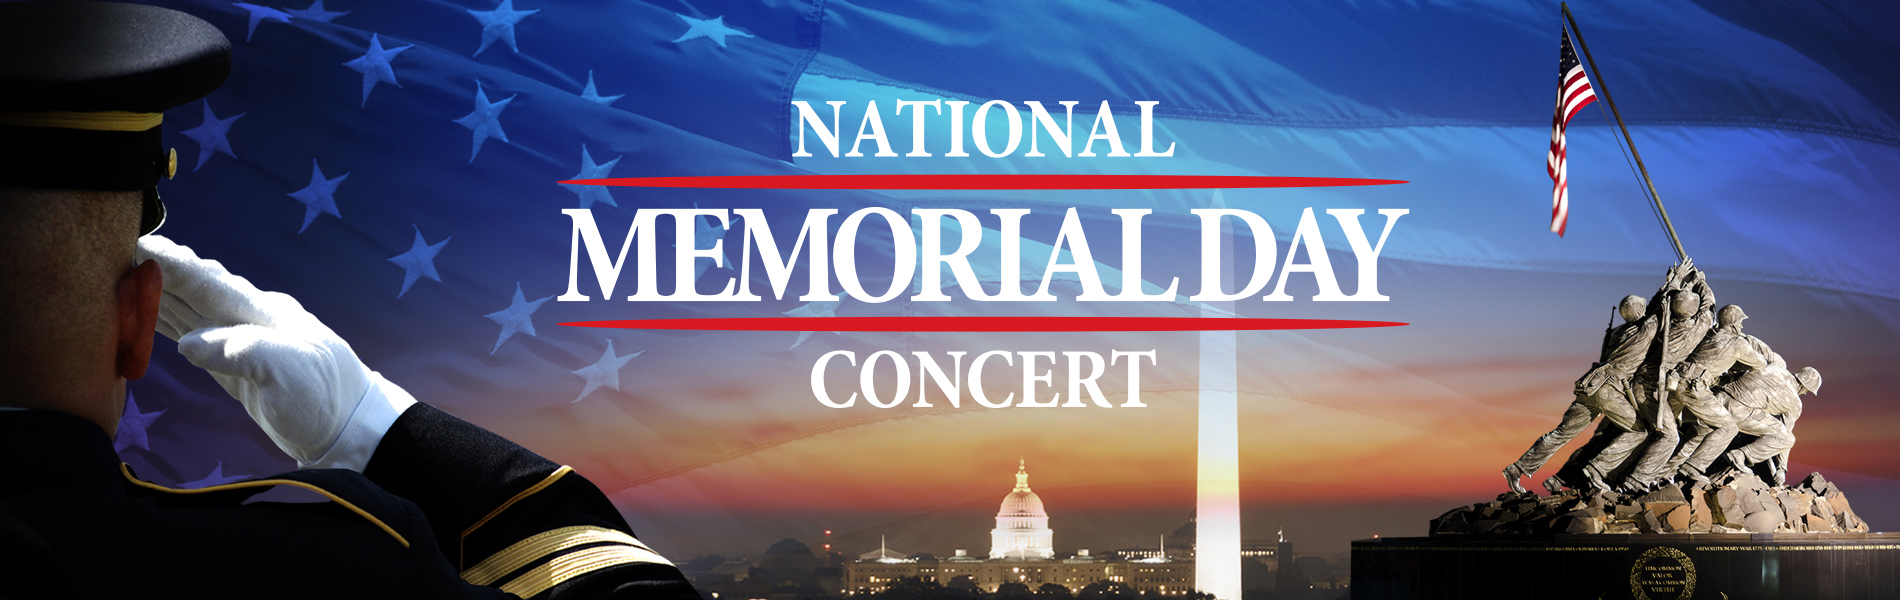 National Memorial Day Concert banner